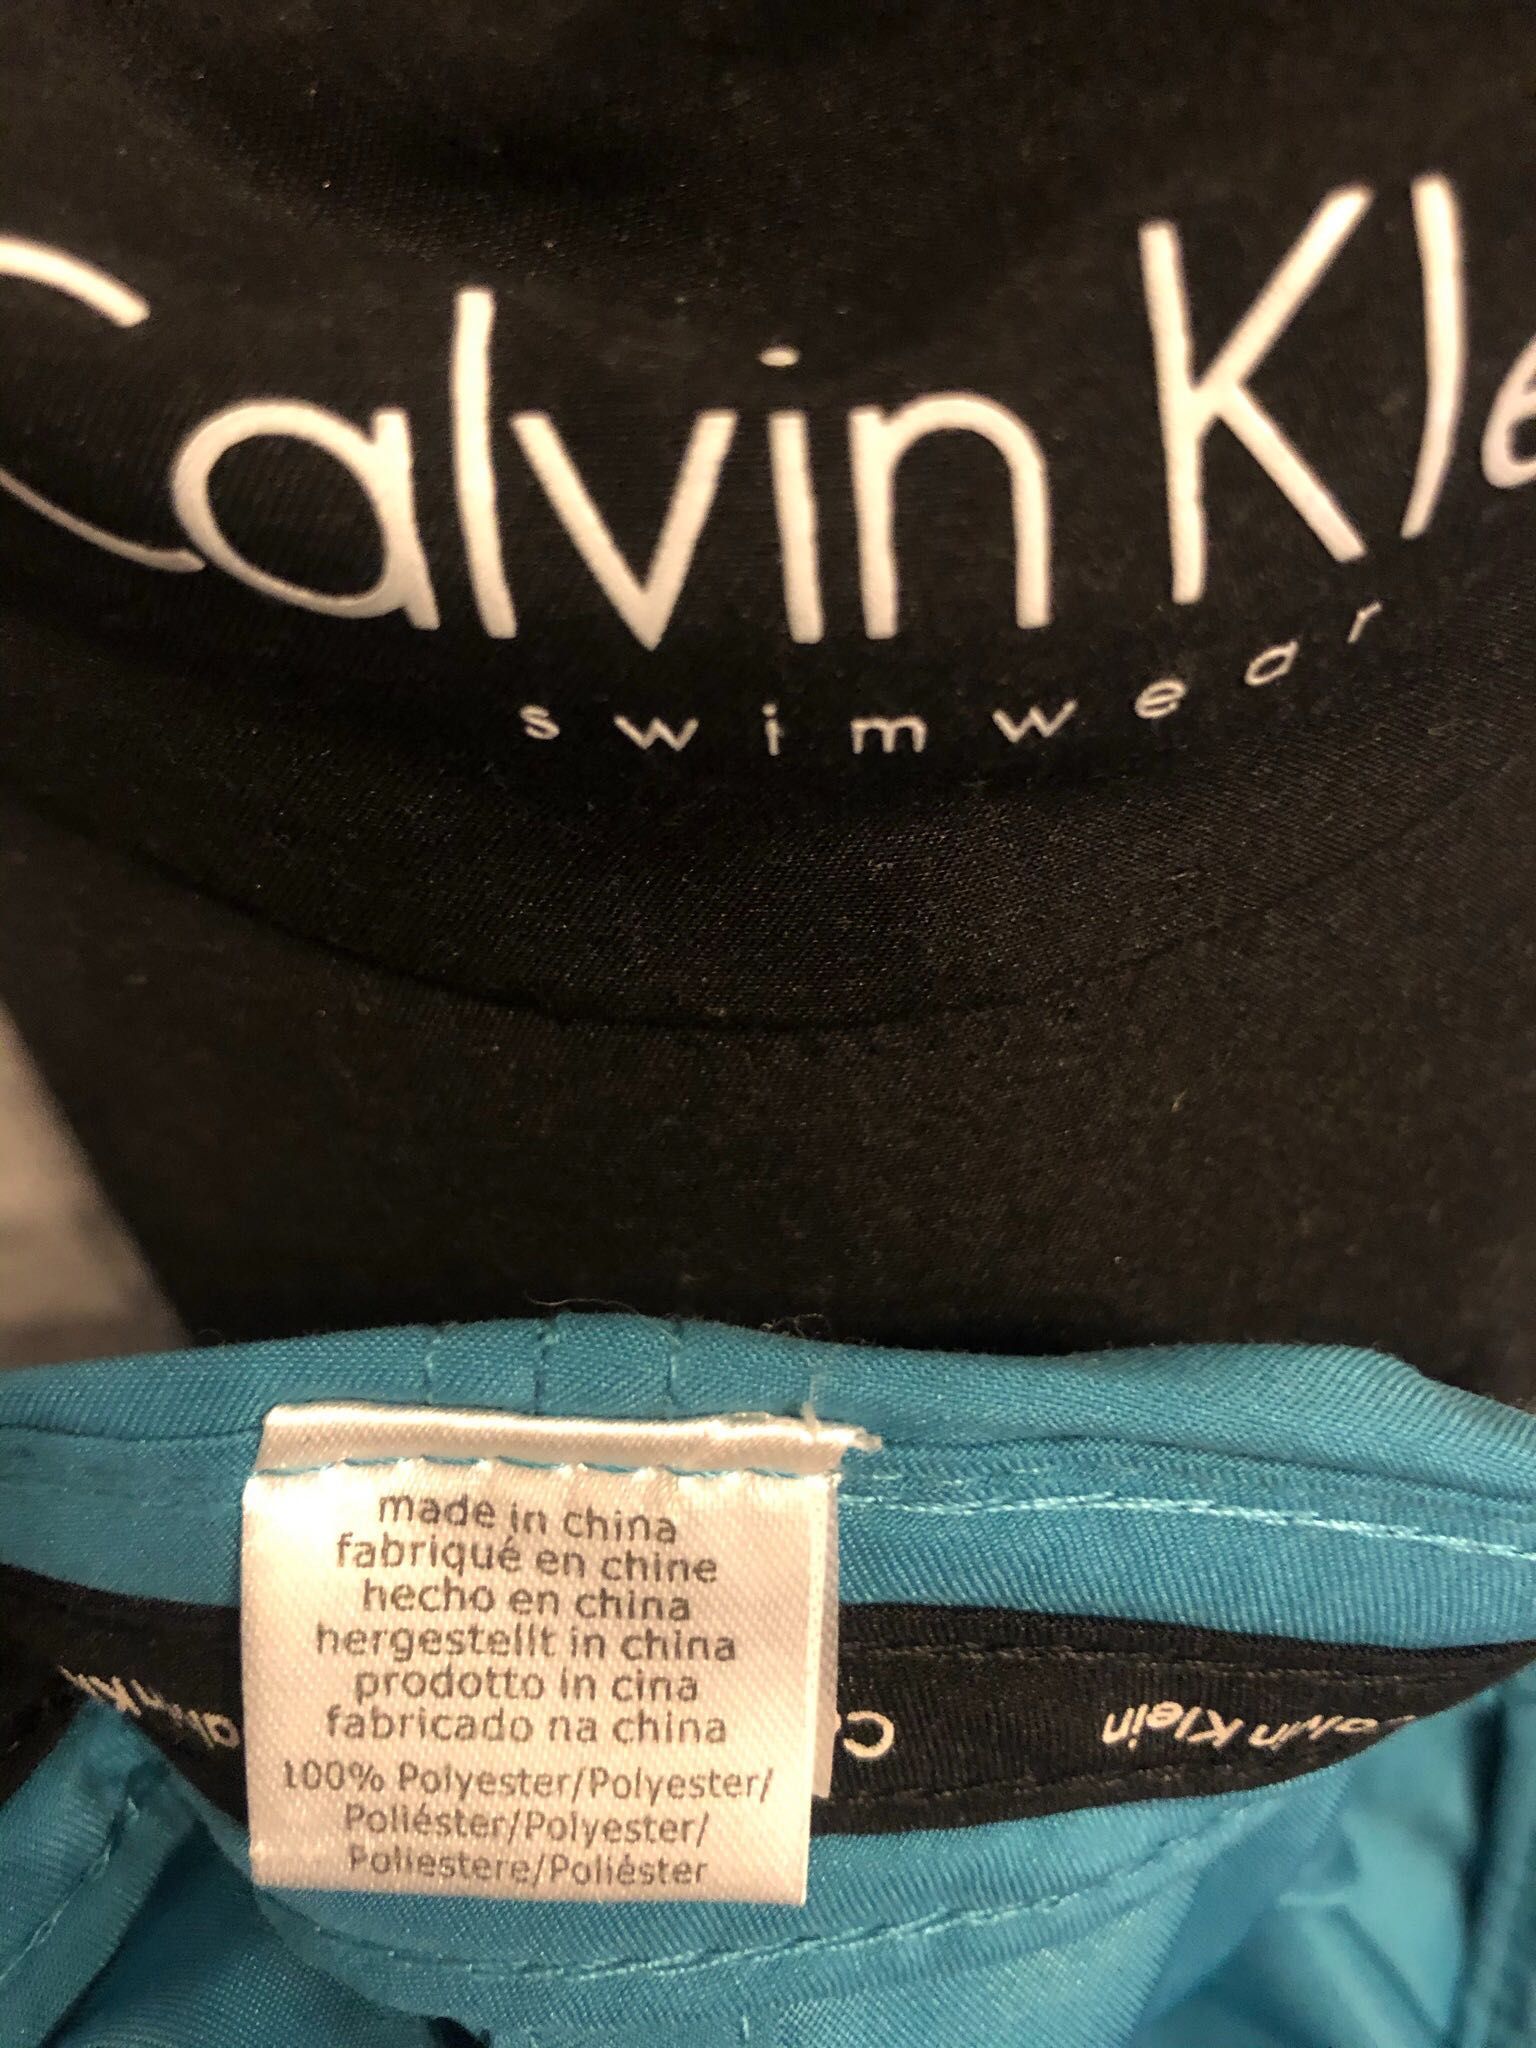 100 % Oryginalna czapka Calvin klein.